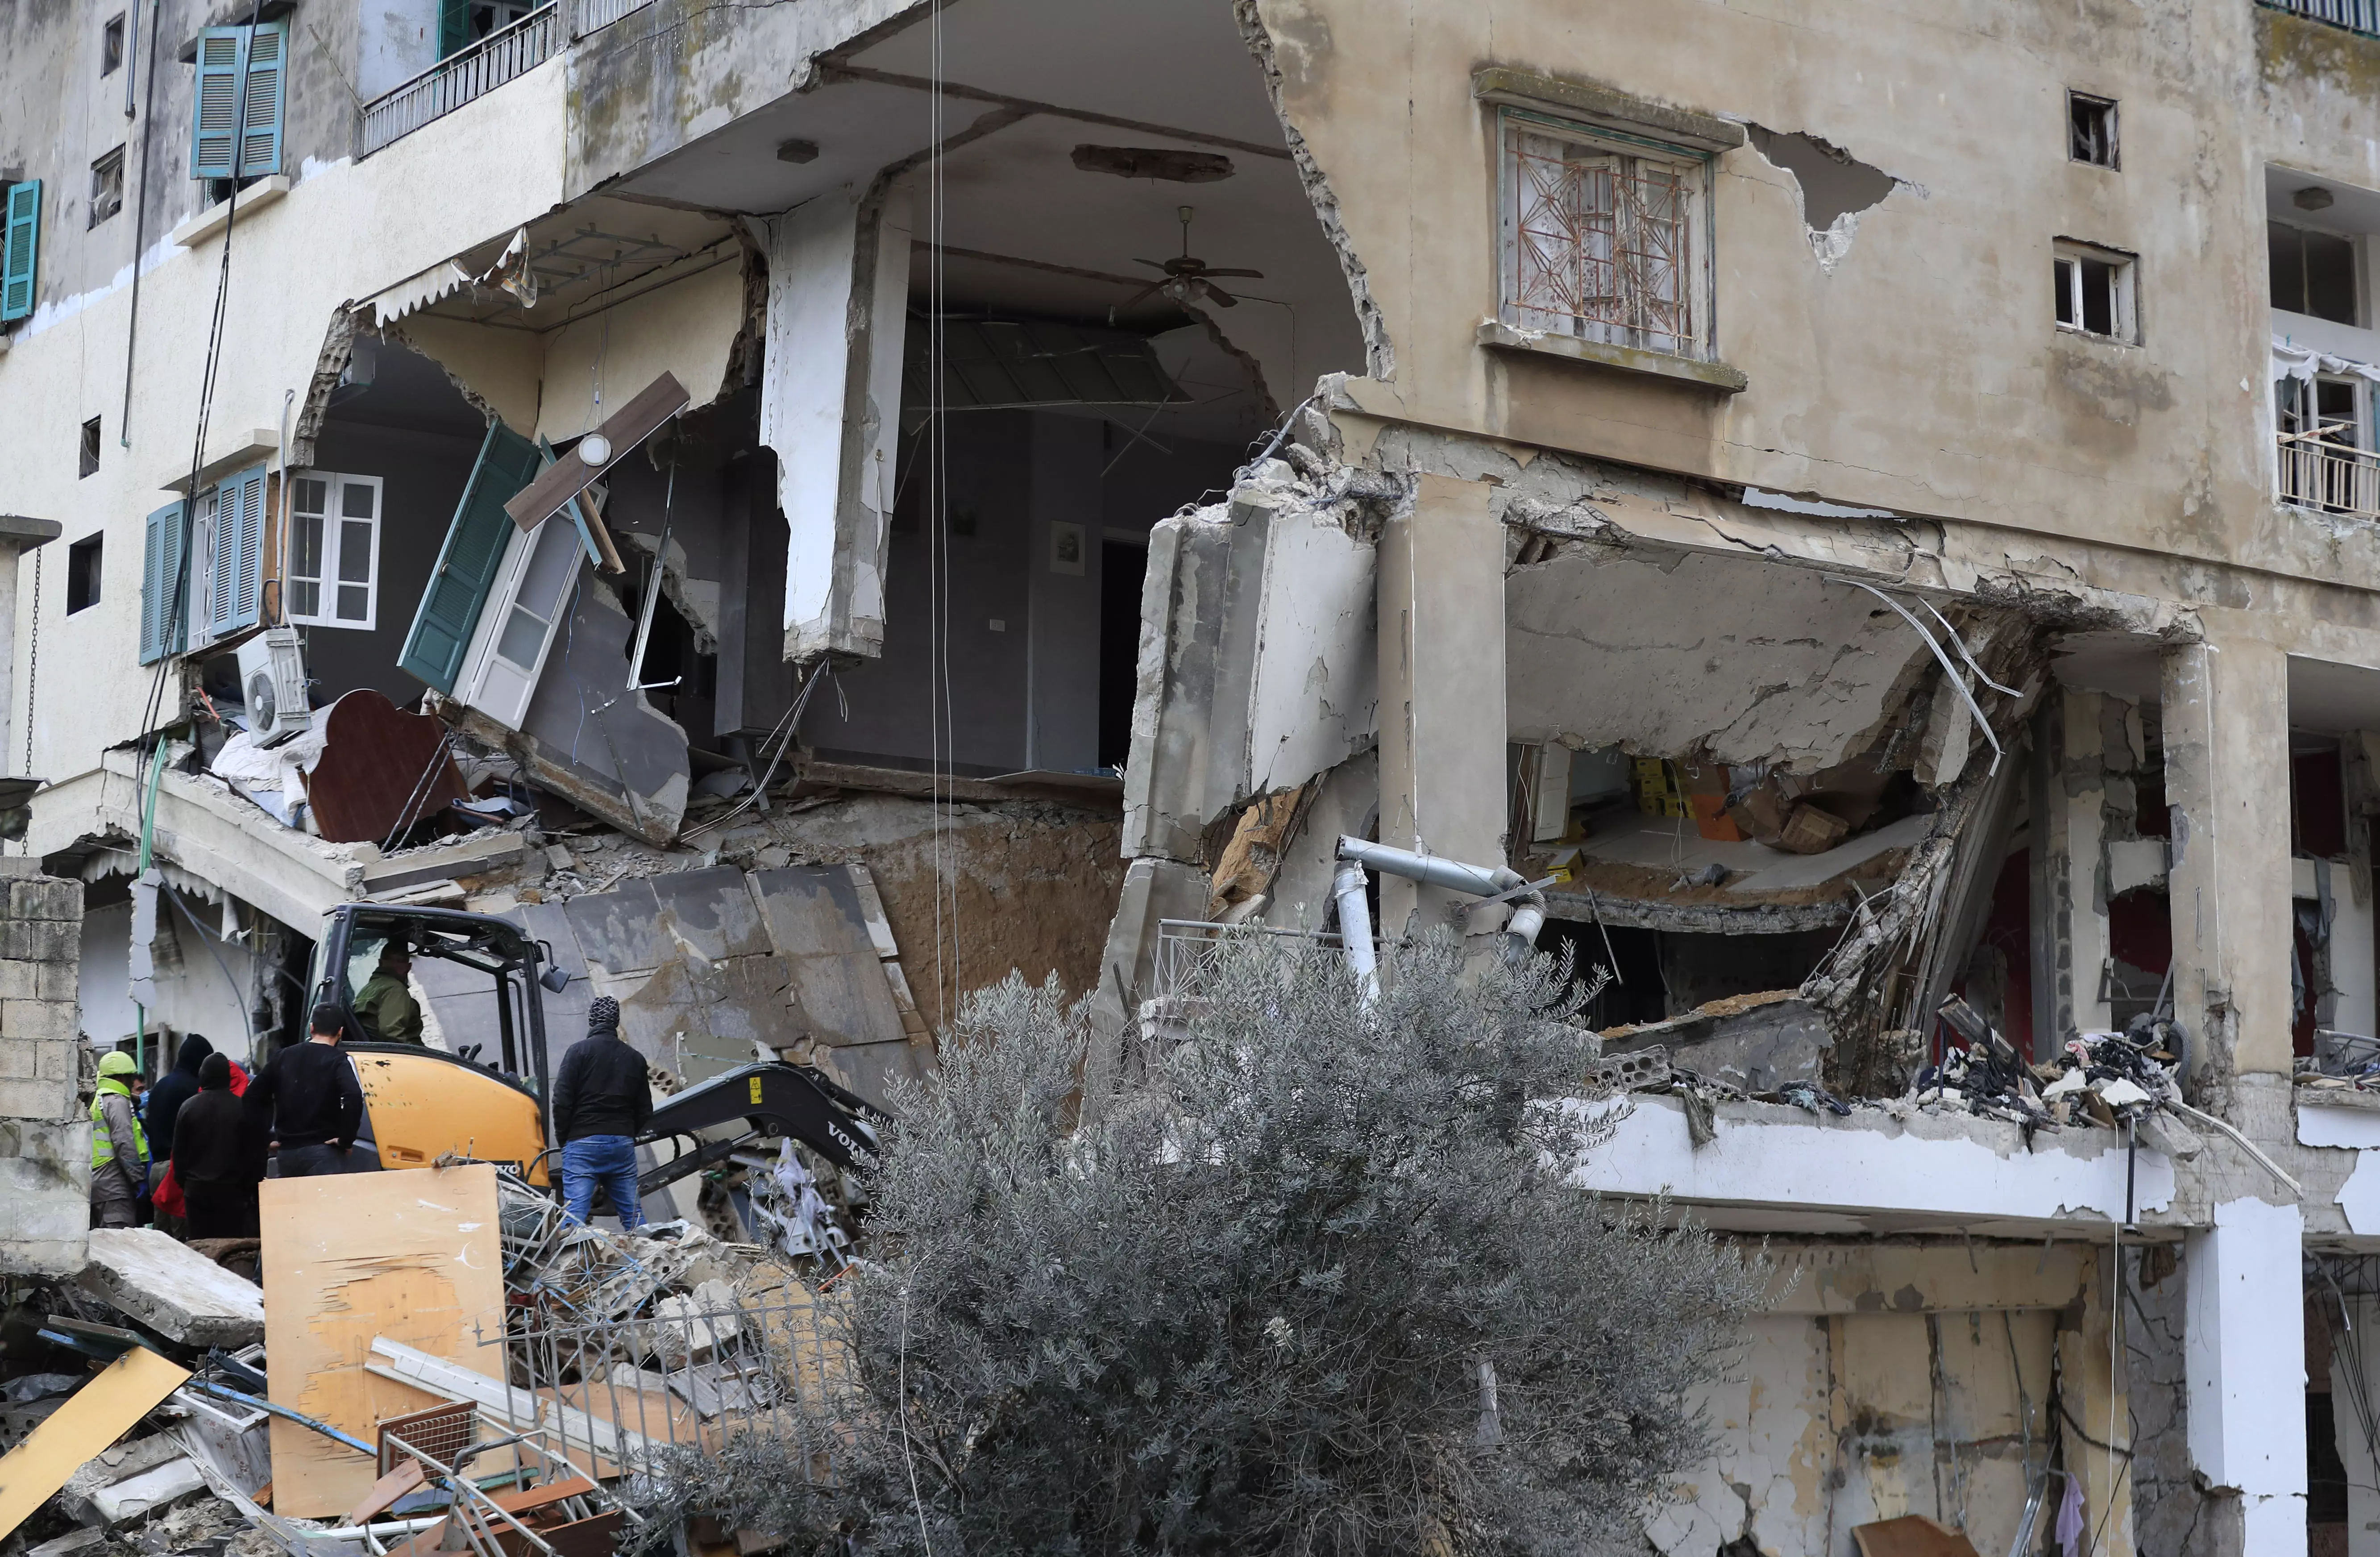 Israeli airstrikes killed 10 Lebanese civilians, Hezbollah vows to retaliate